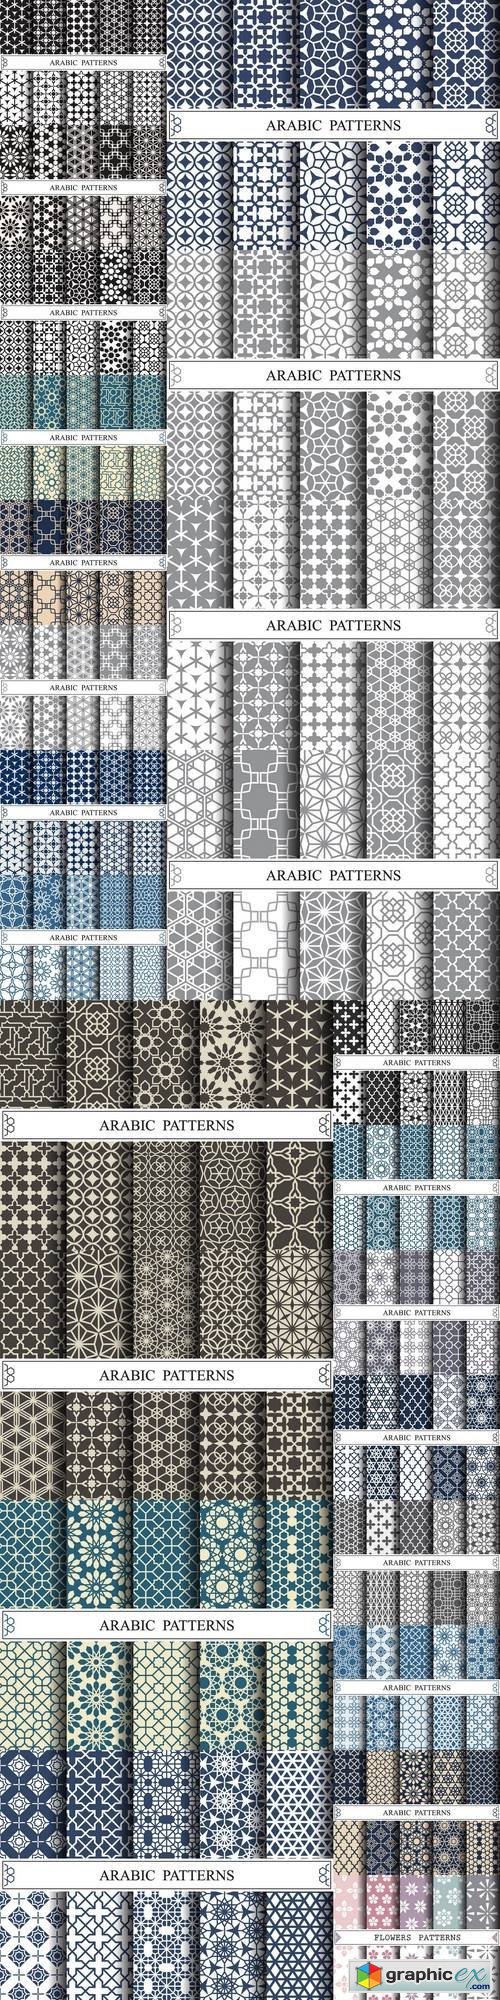 Arabic patterns